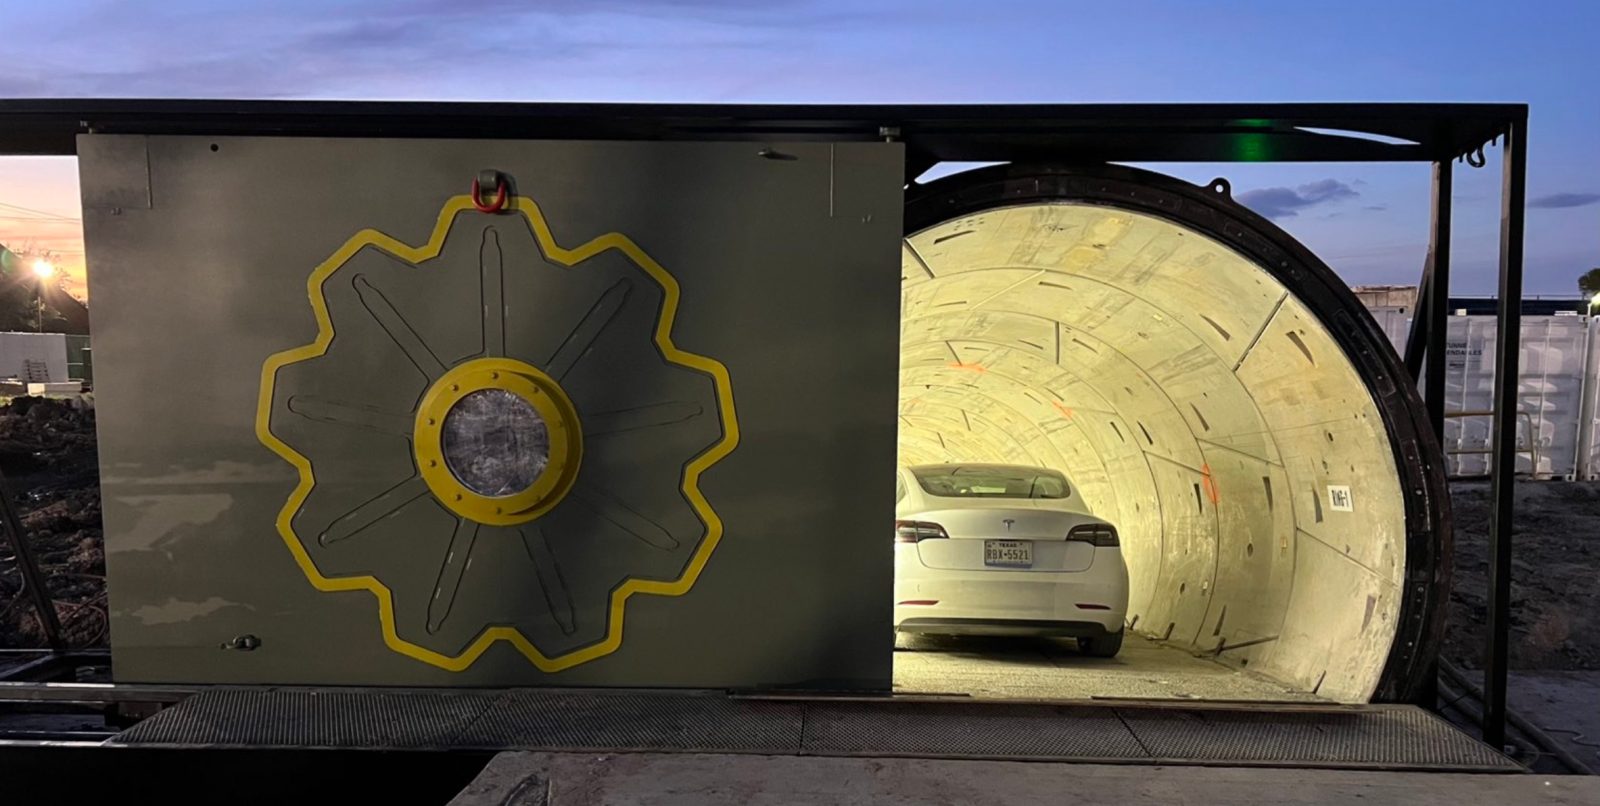 The Boring Company Hyperloop test